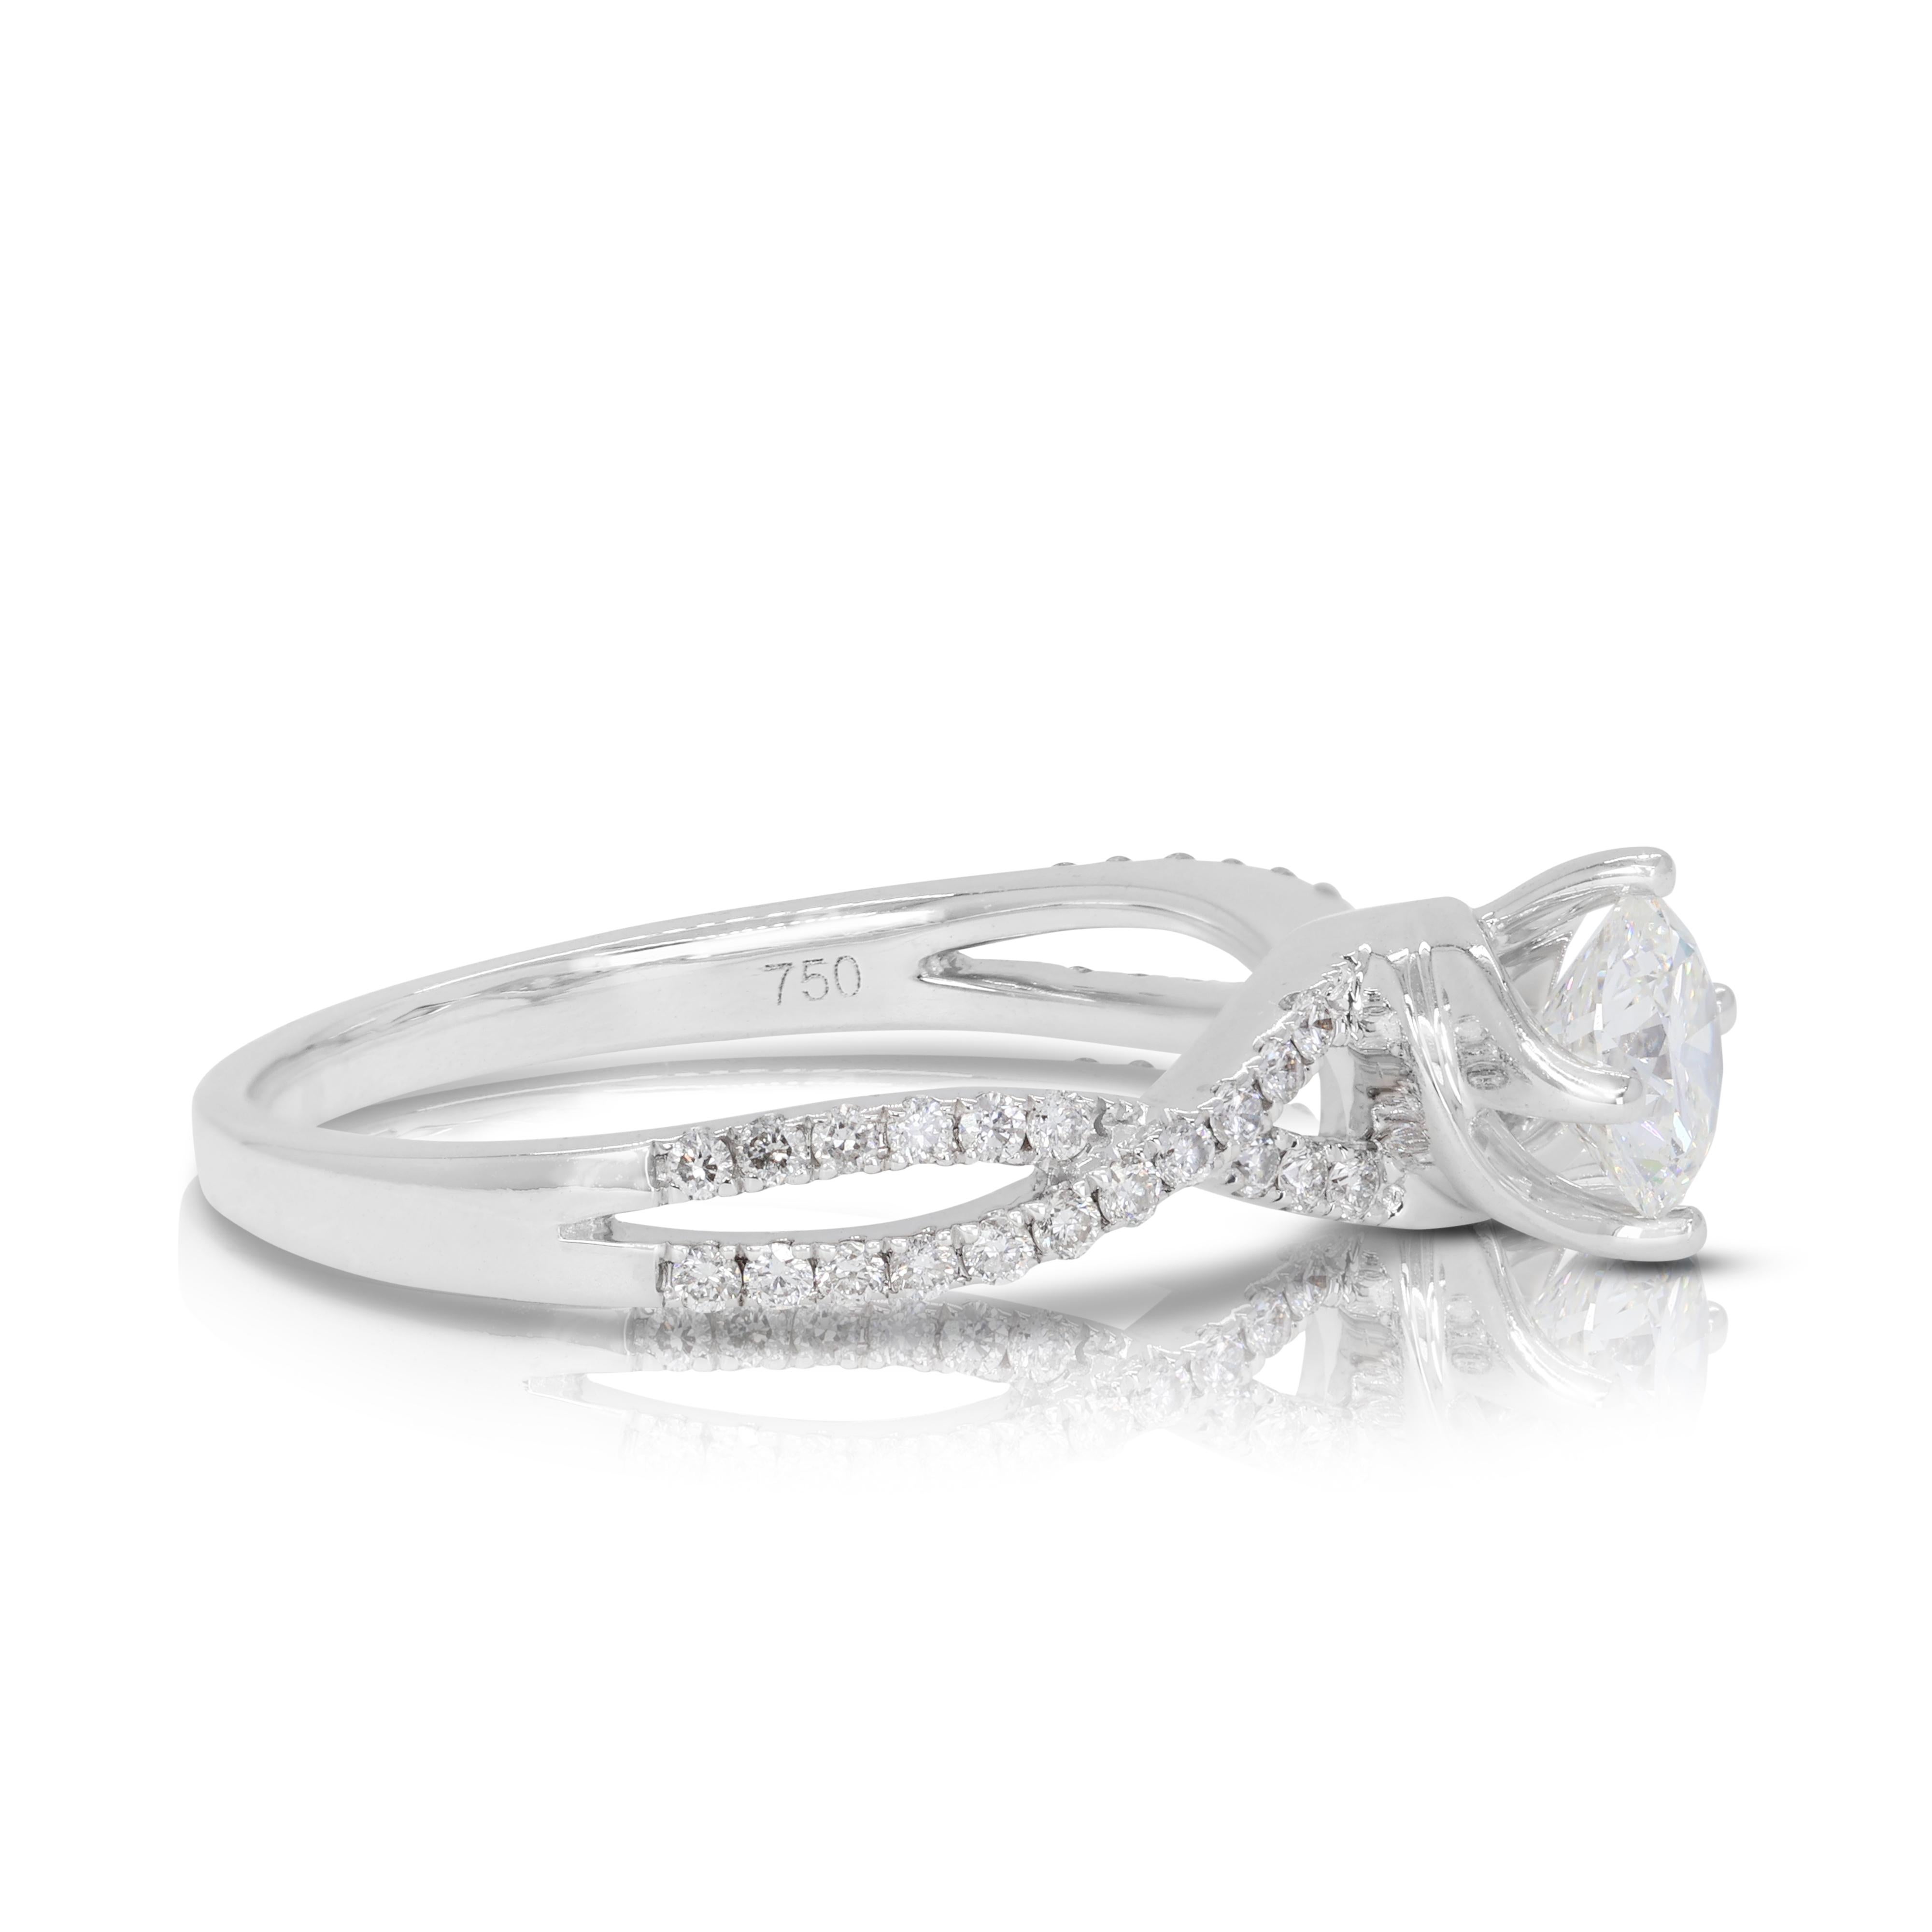 Elegant 0.70ct Diamond Halo Ring set in 18K White Gold For Sale 2